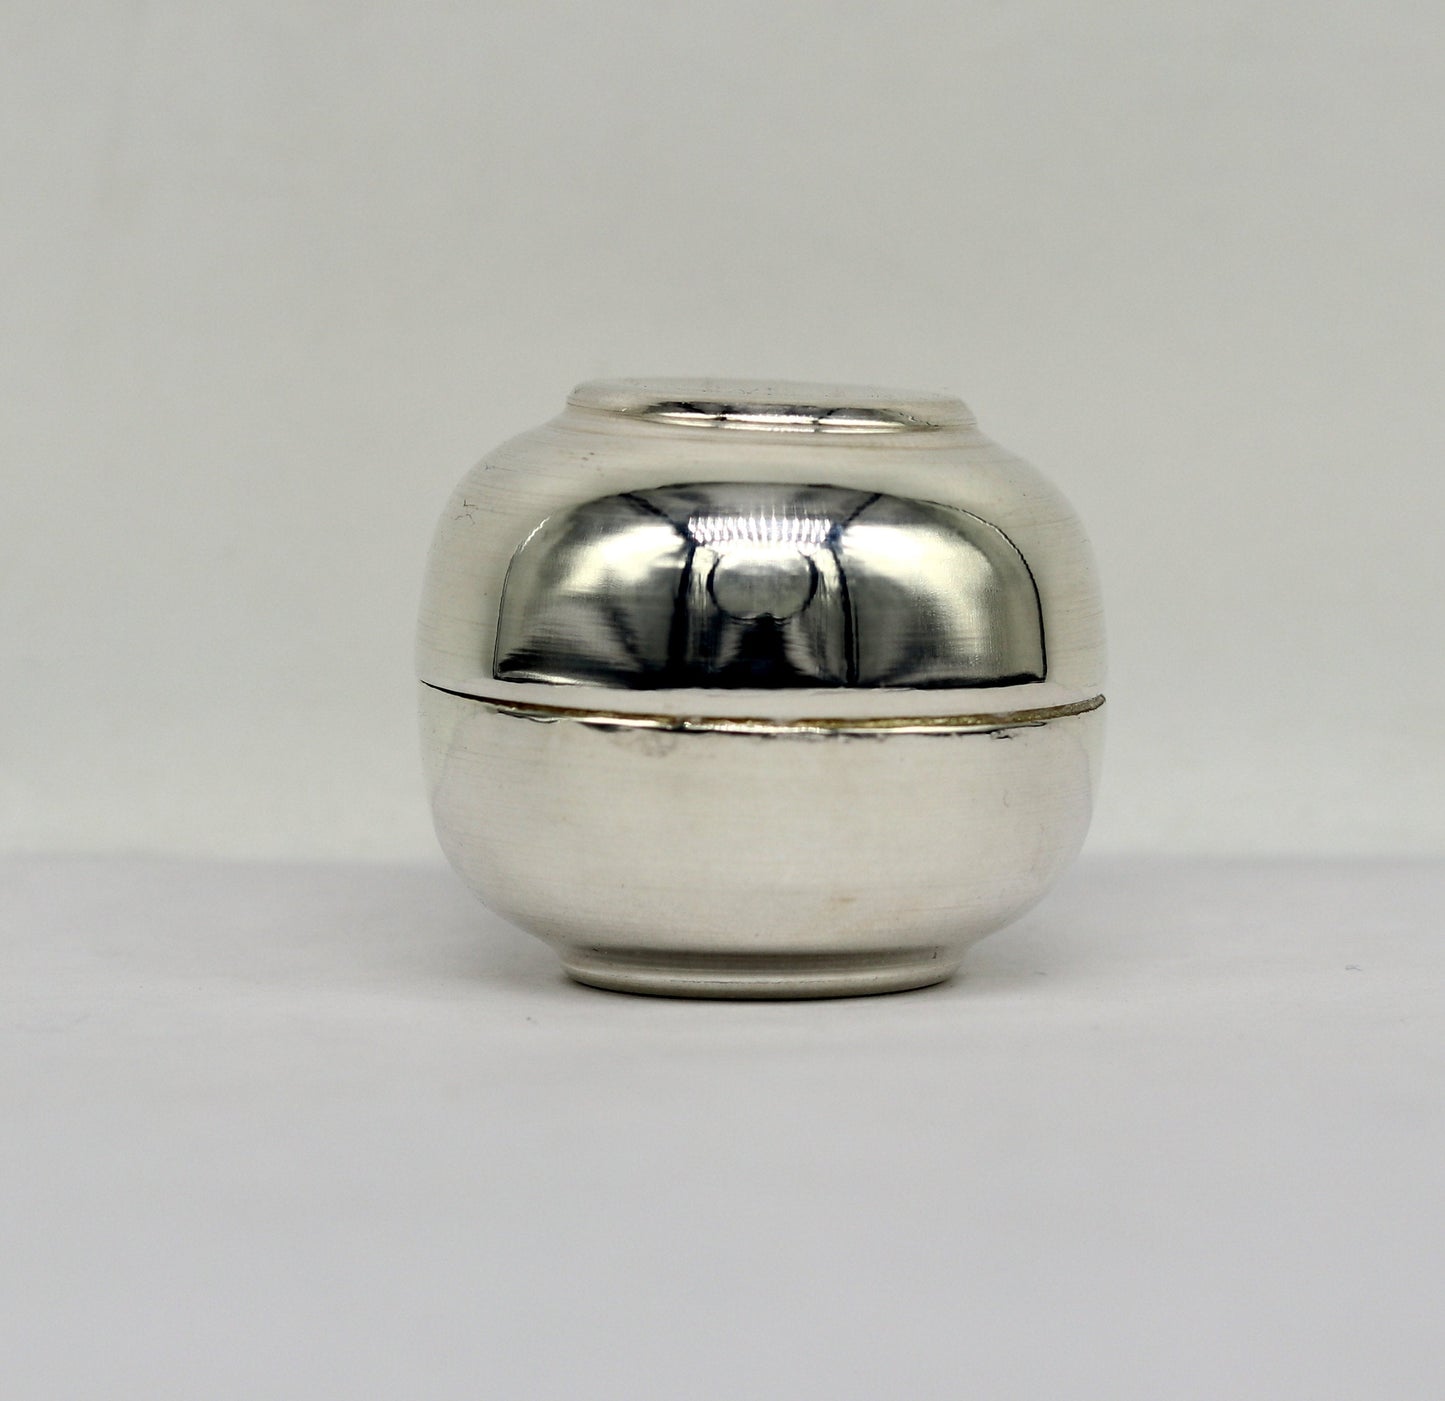 999 fine silver handmade gorgeous small idol's Prasad box, trinket box, container box, brides Sindur box, solid silver article utensil sv185 - TRIBAL ORNAMENTS